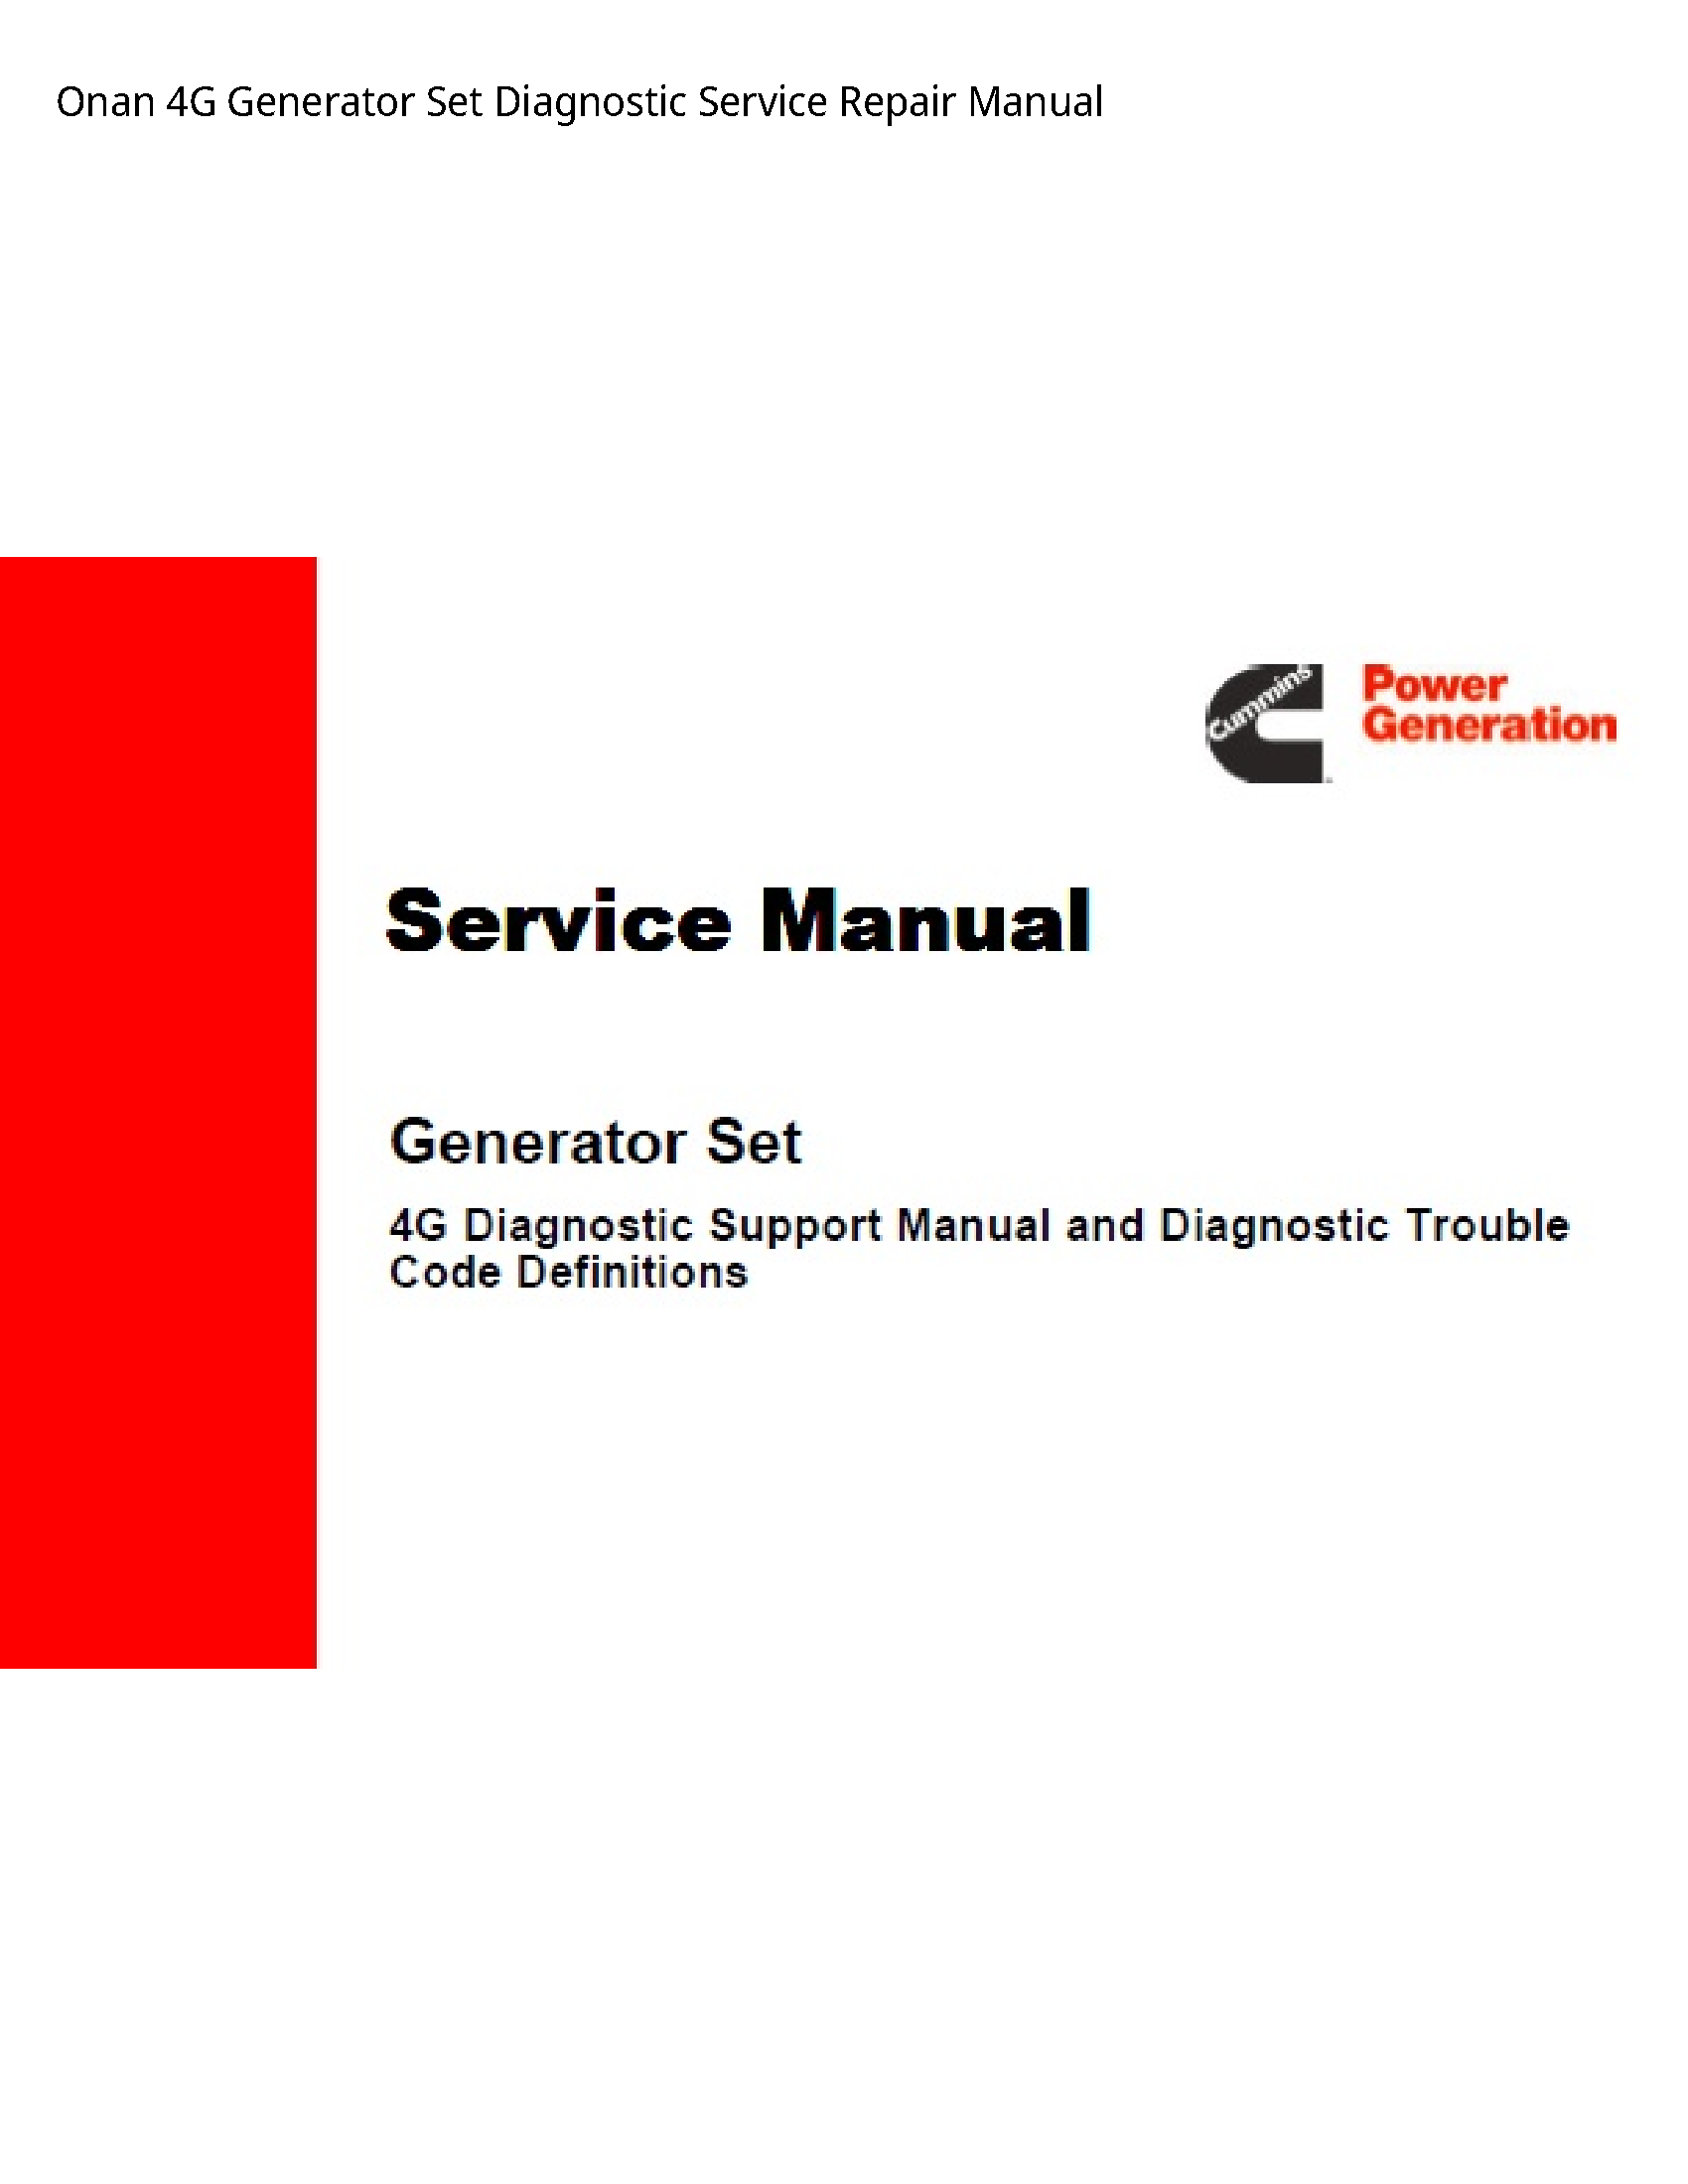 Onan 4G Generator Set Diagnostic manual